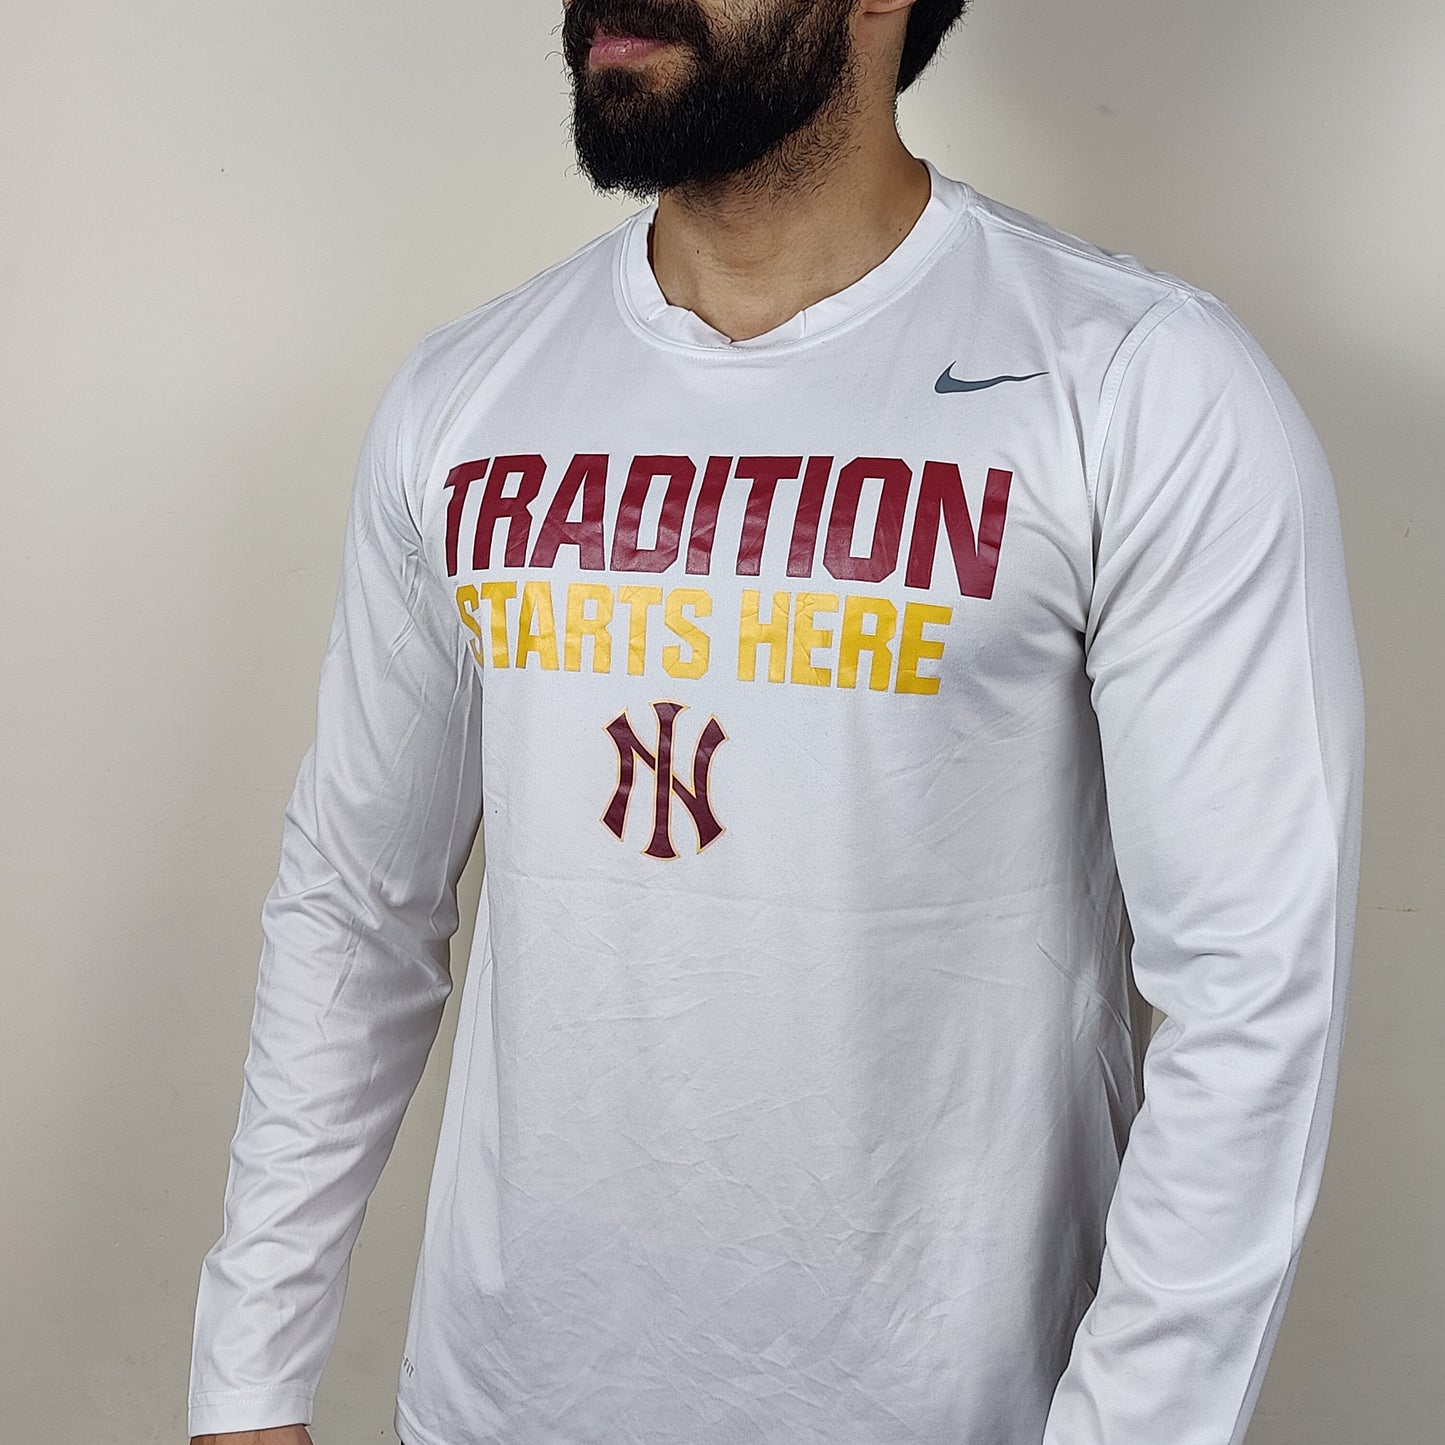 Nike Tradition DriFit - White